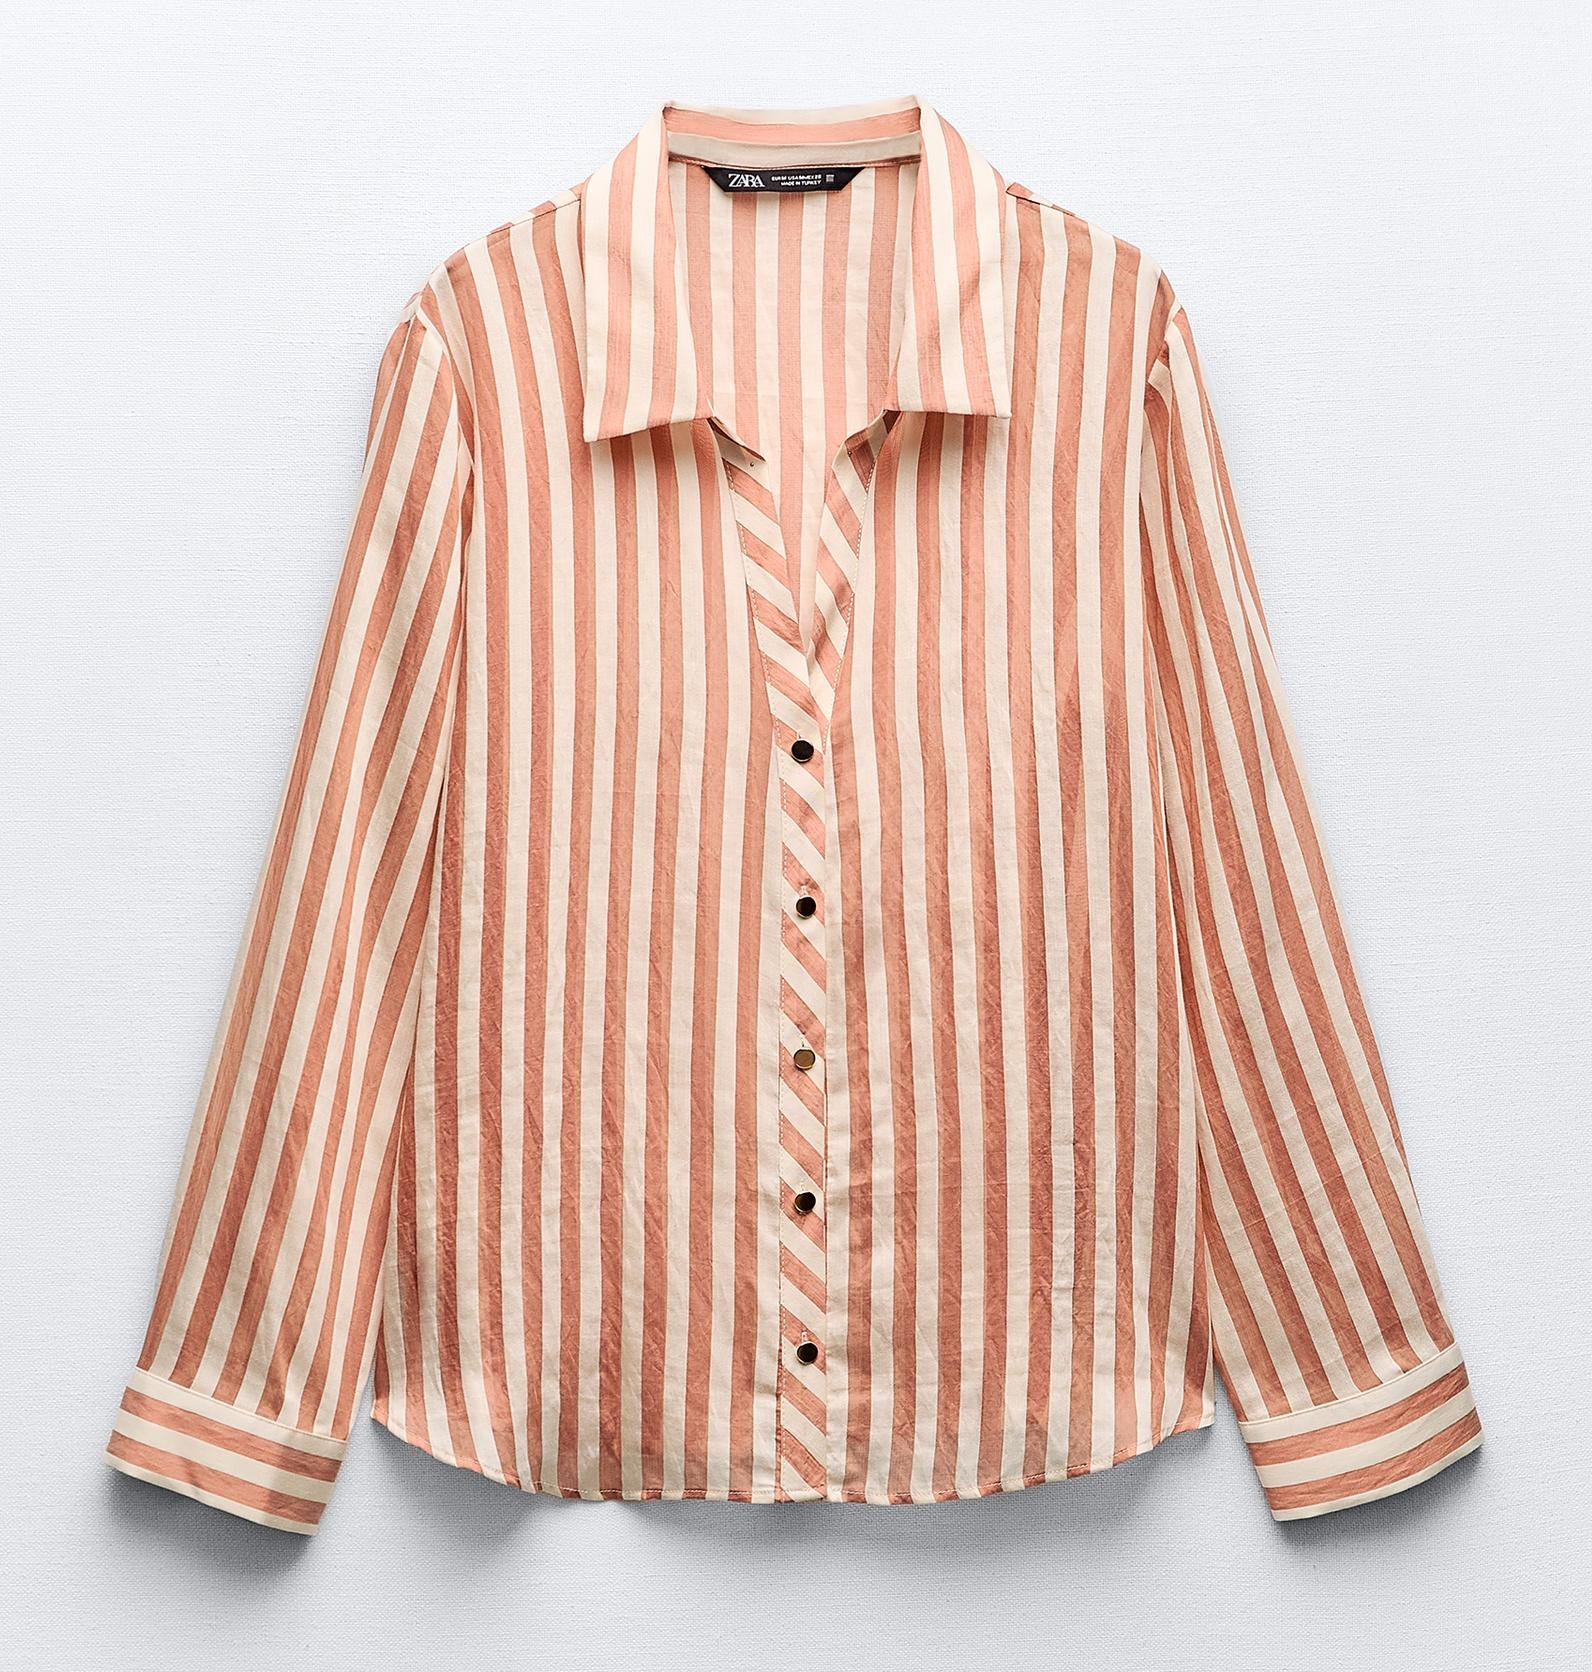 Рубашка Zara Striped, темно-оранжевый рубашка в полоску с длинными рукавами l синий